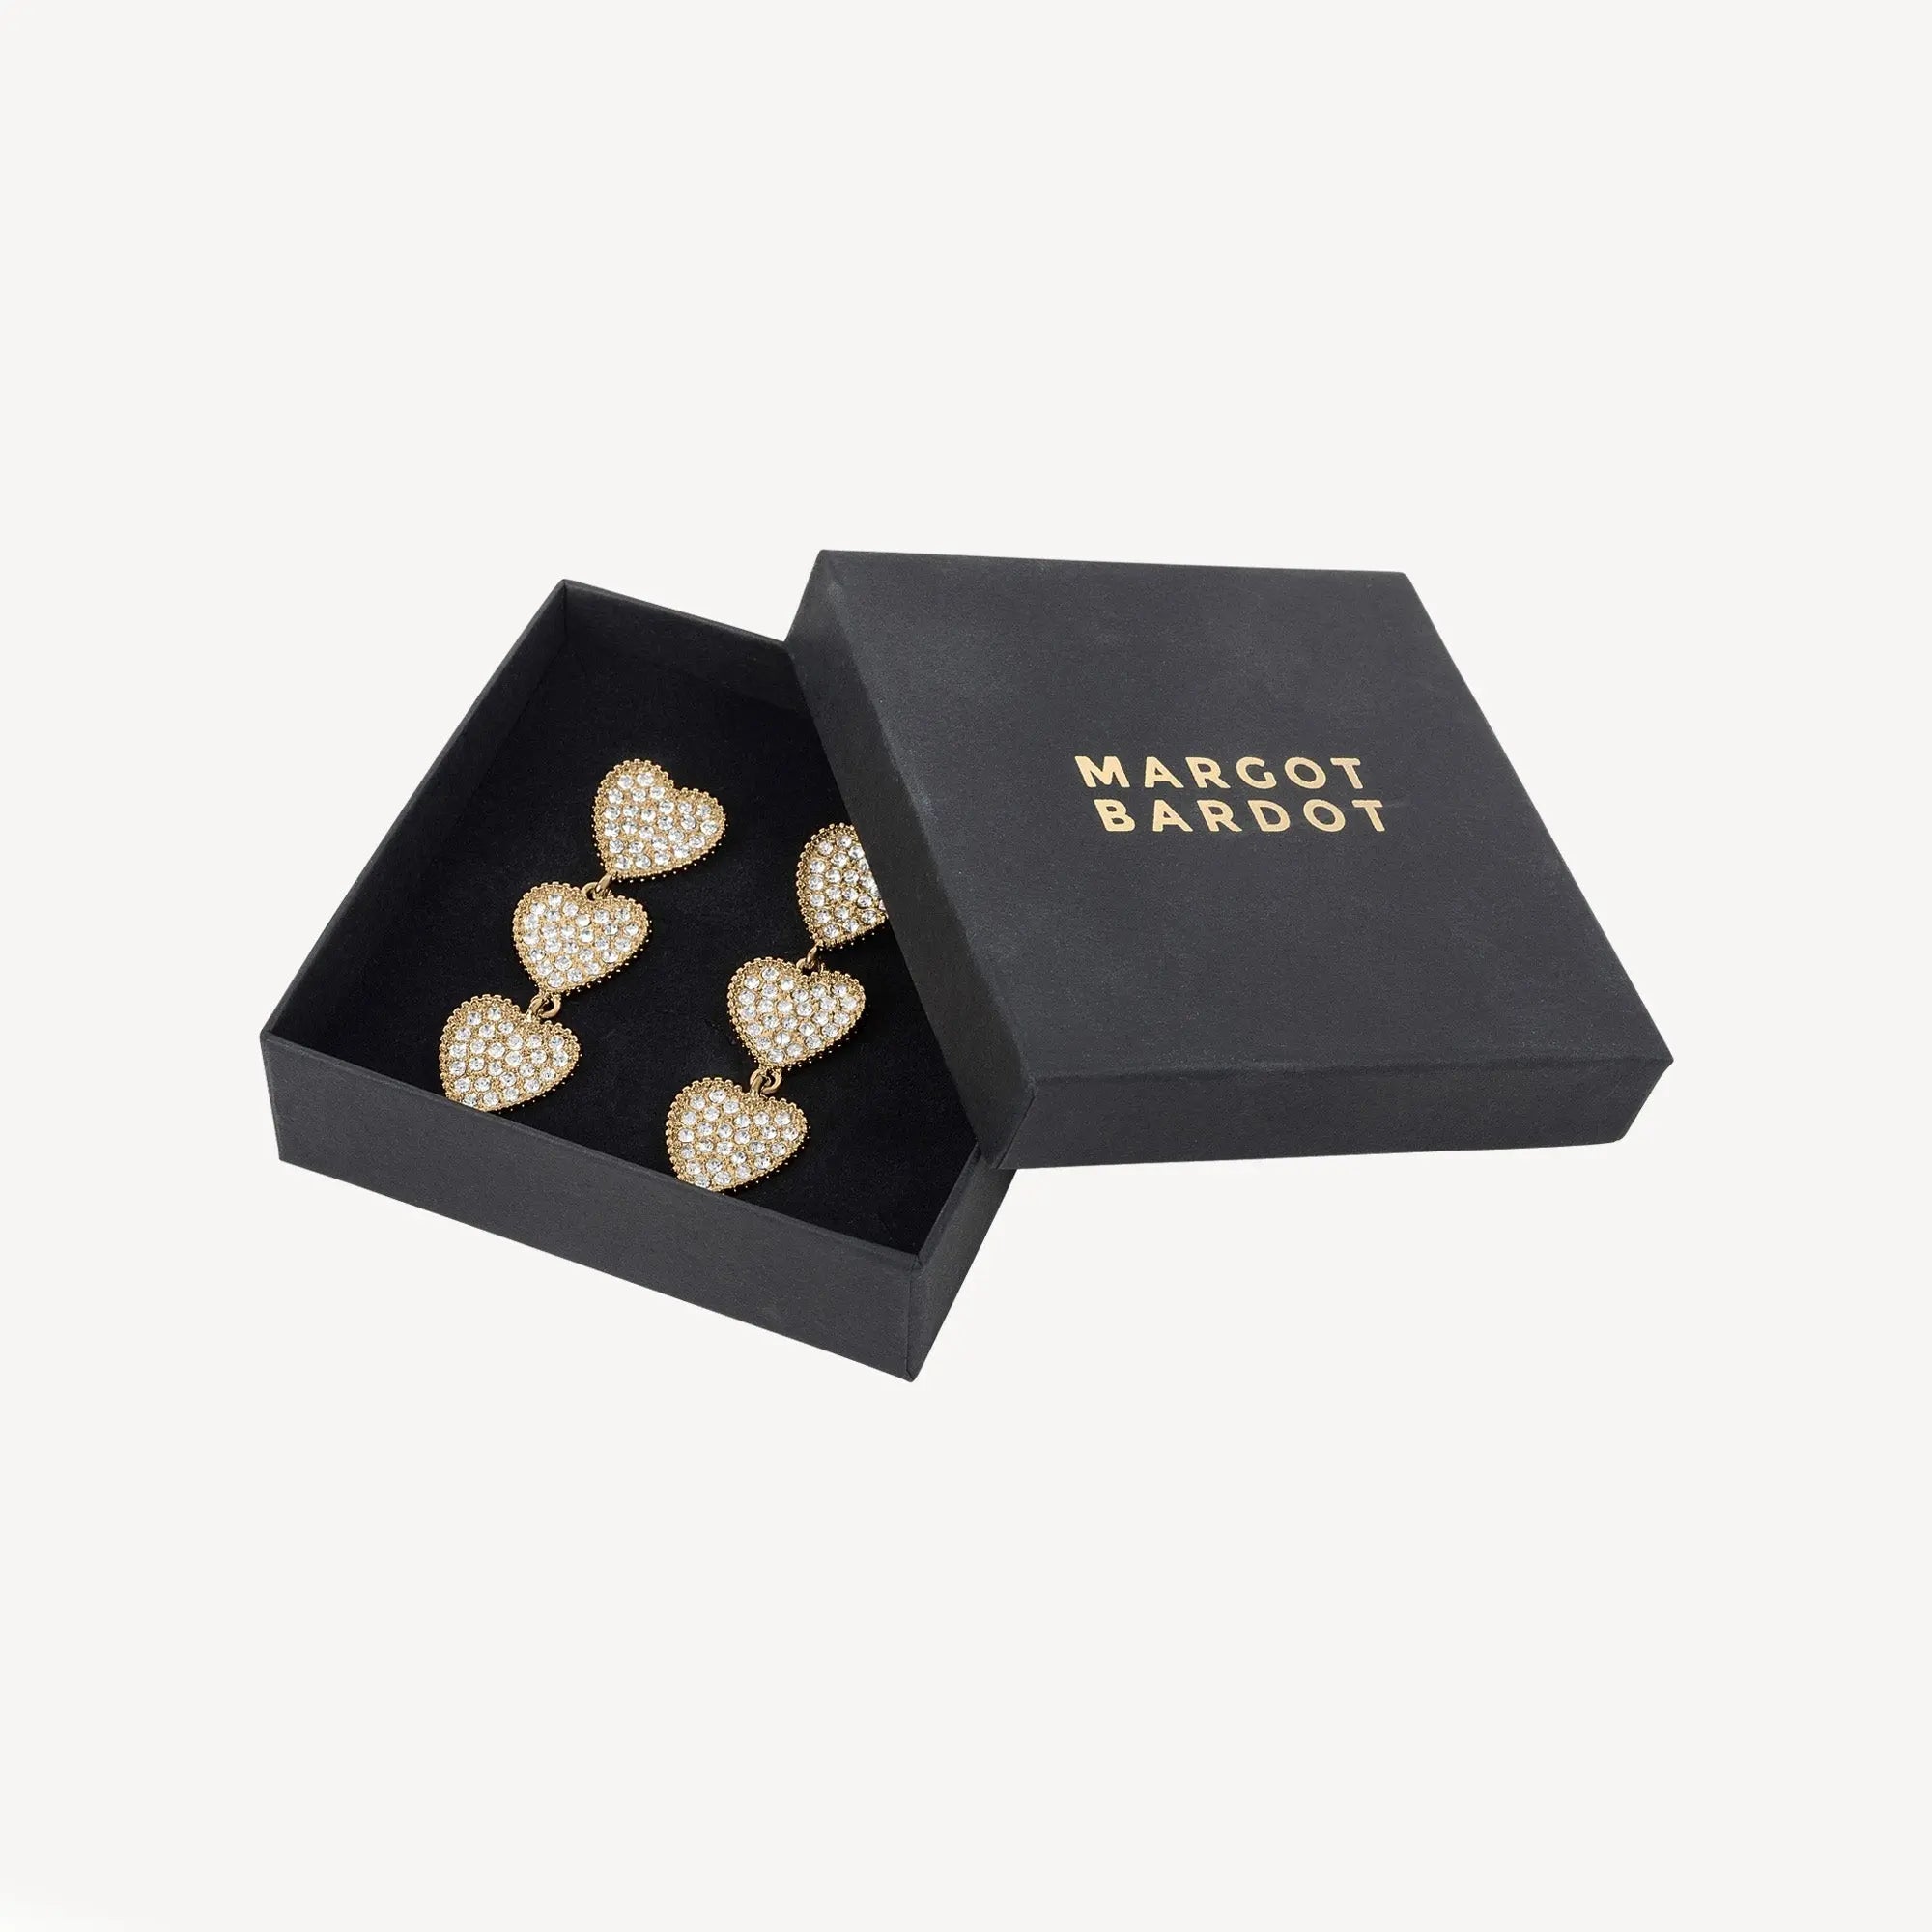 PersonaliMaeva Studs - Black heart shaped earrings in a personalized box by Margot Bardot Online